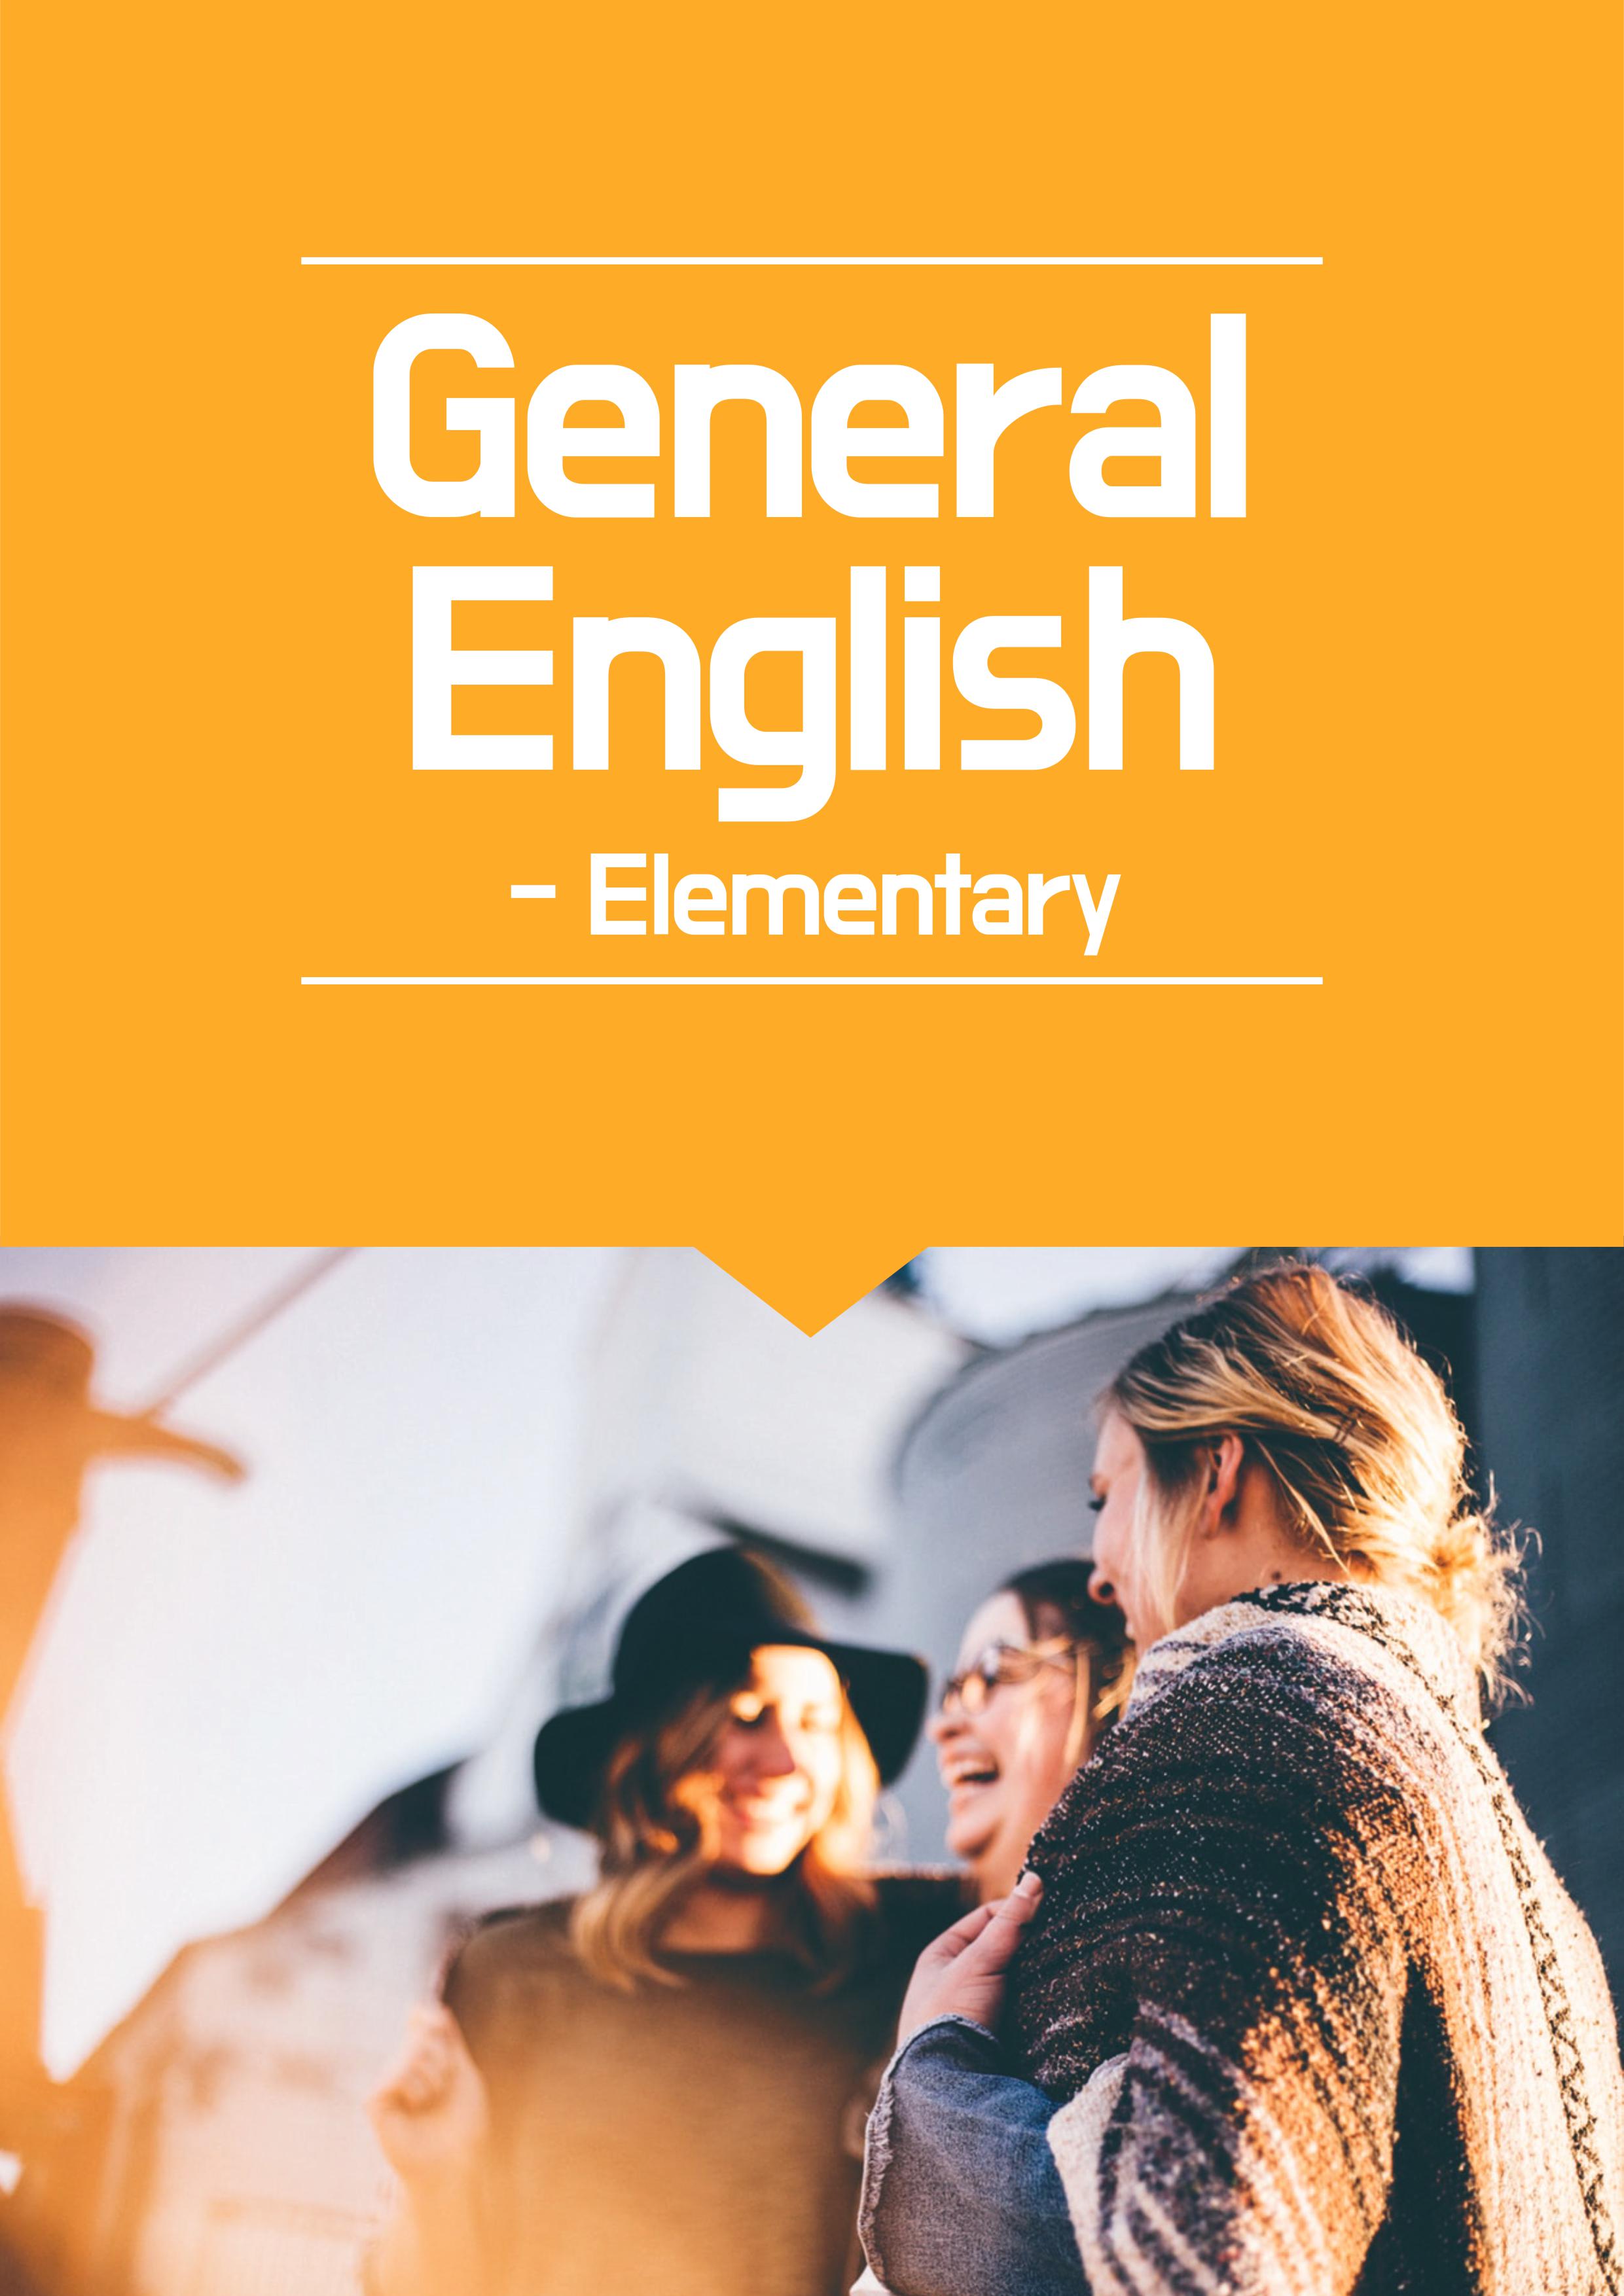 General English - Elementary